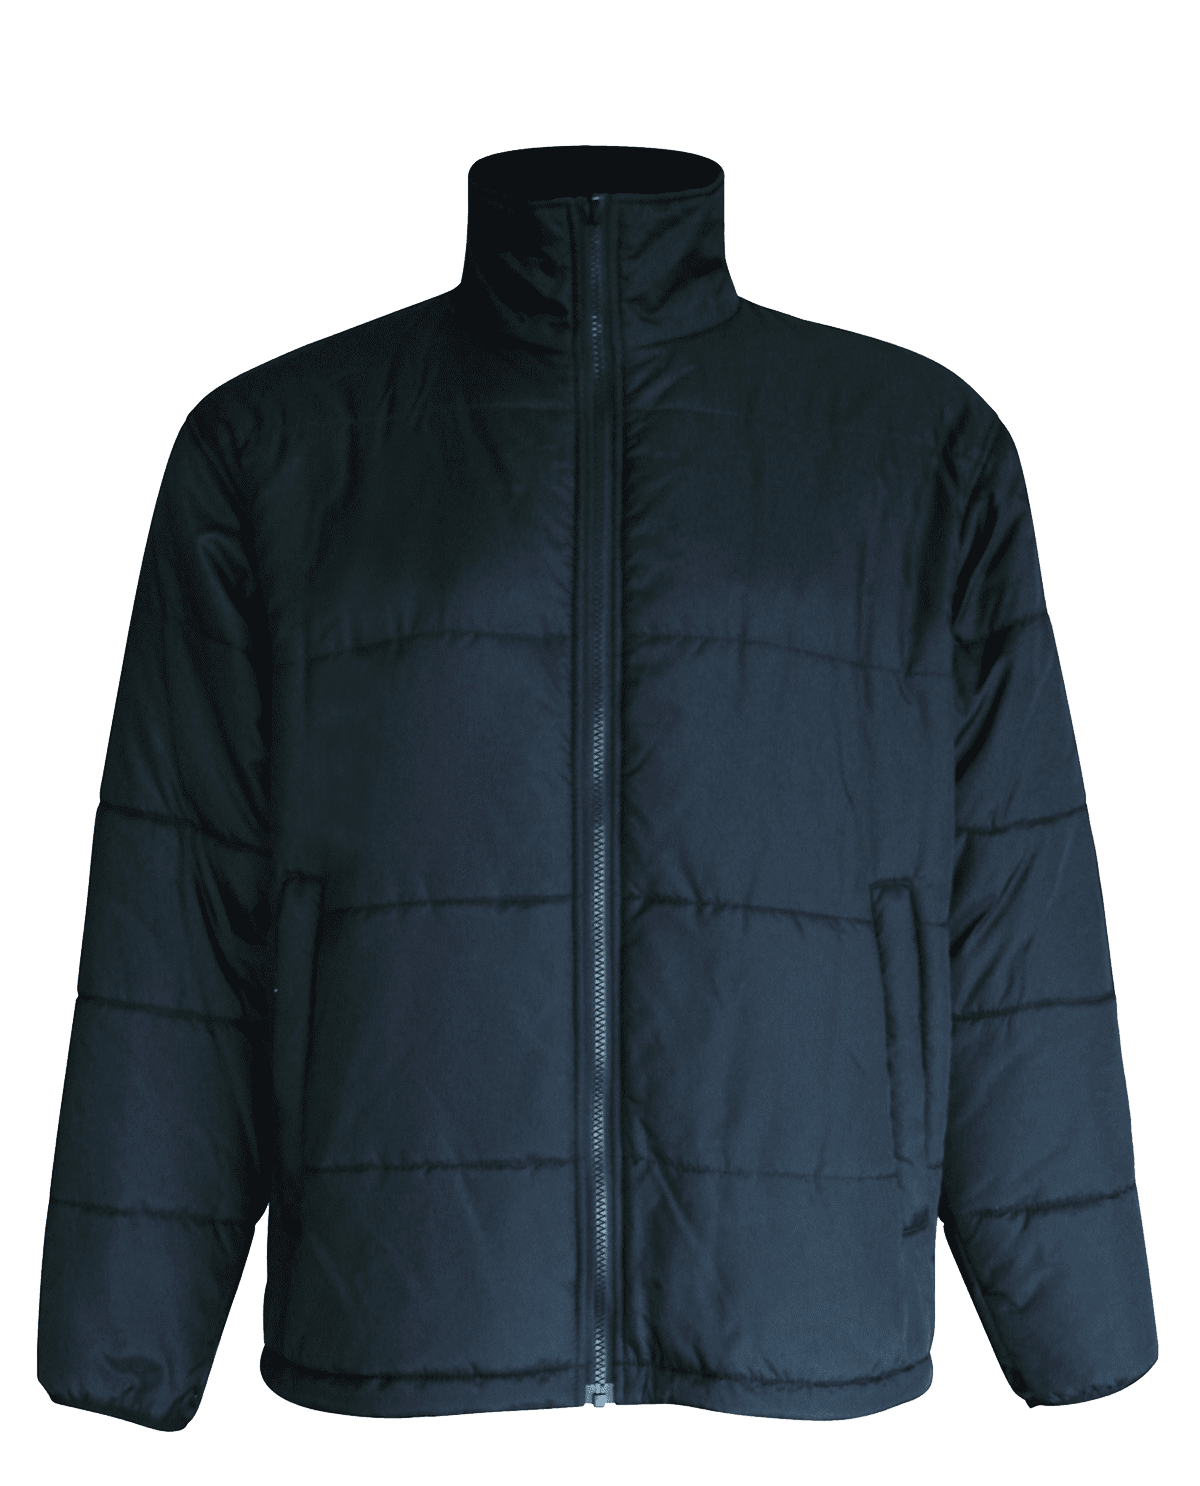 Viking Wear Ultimate ArcticLite Jacket-Black